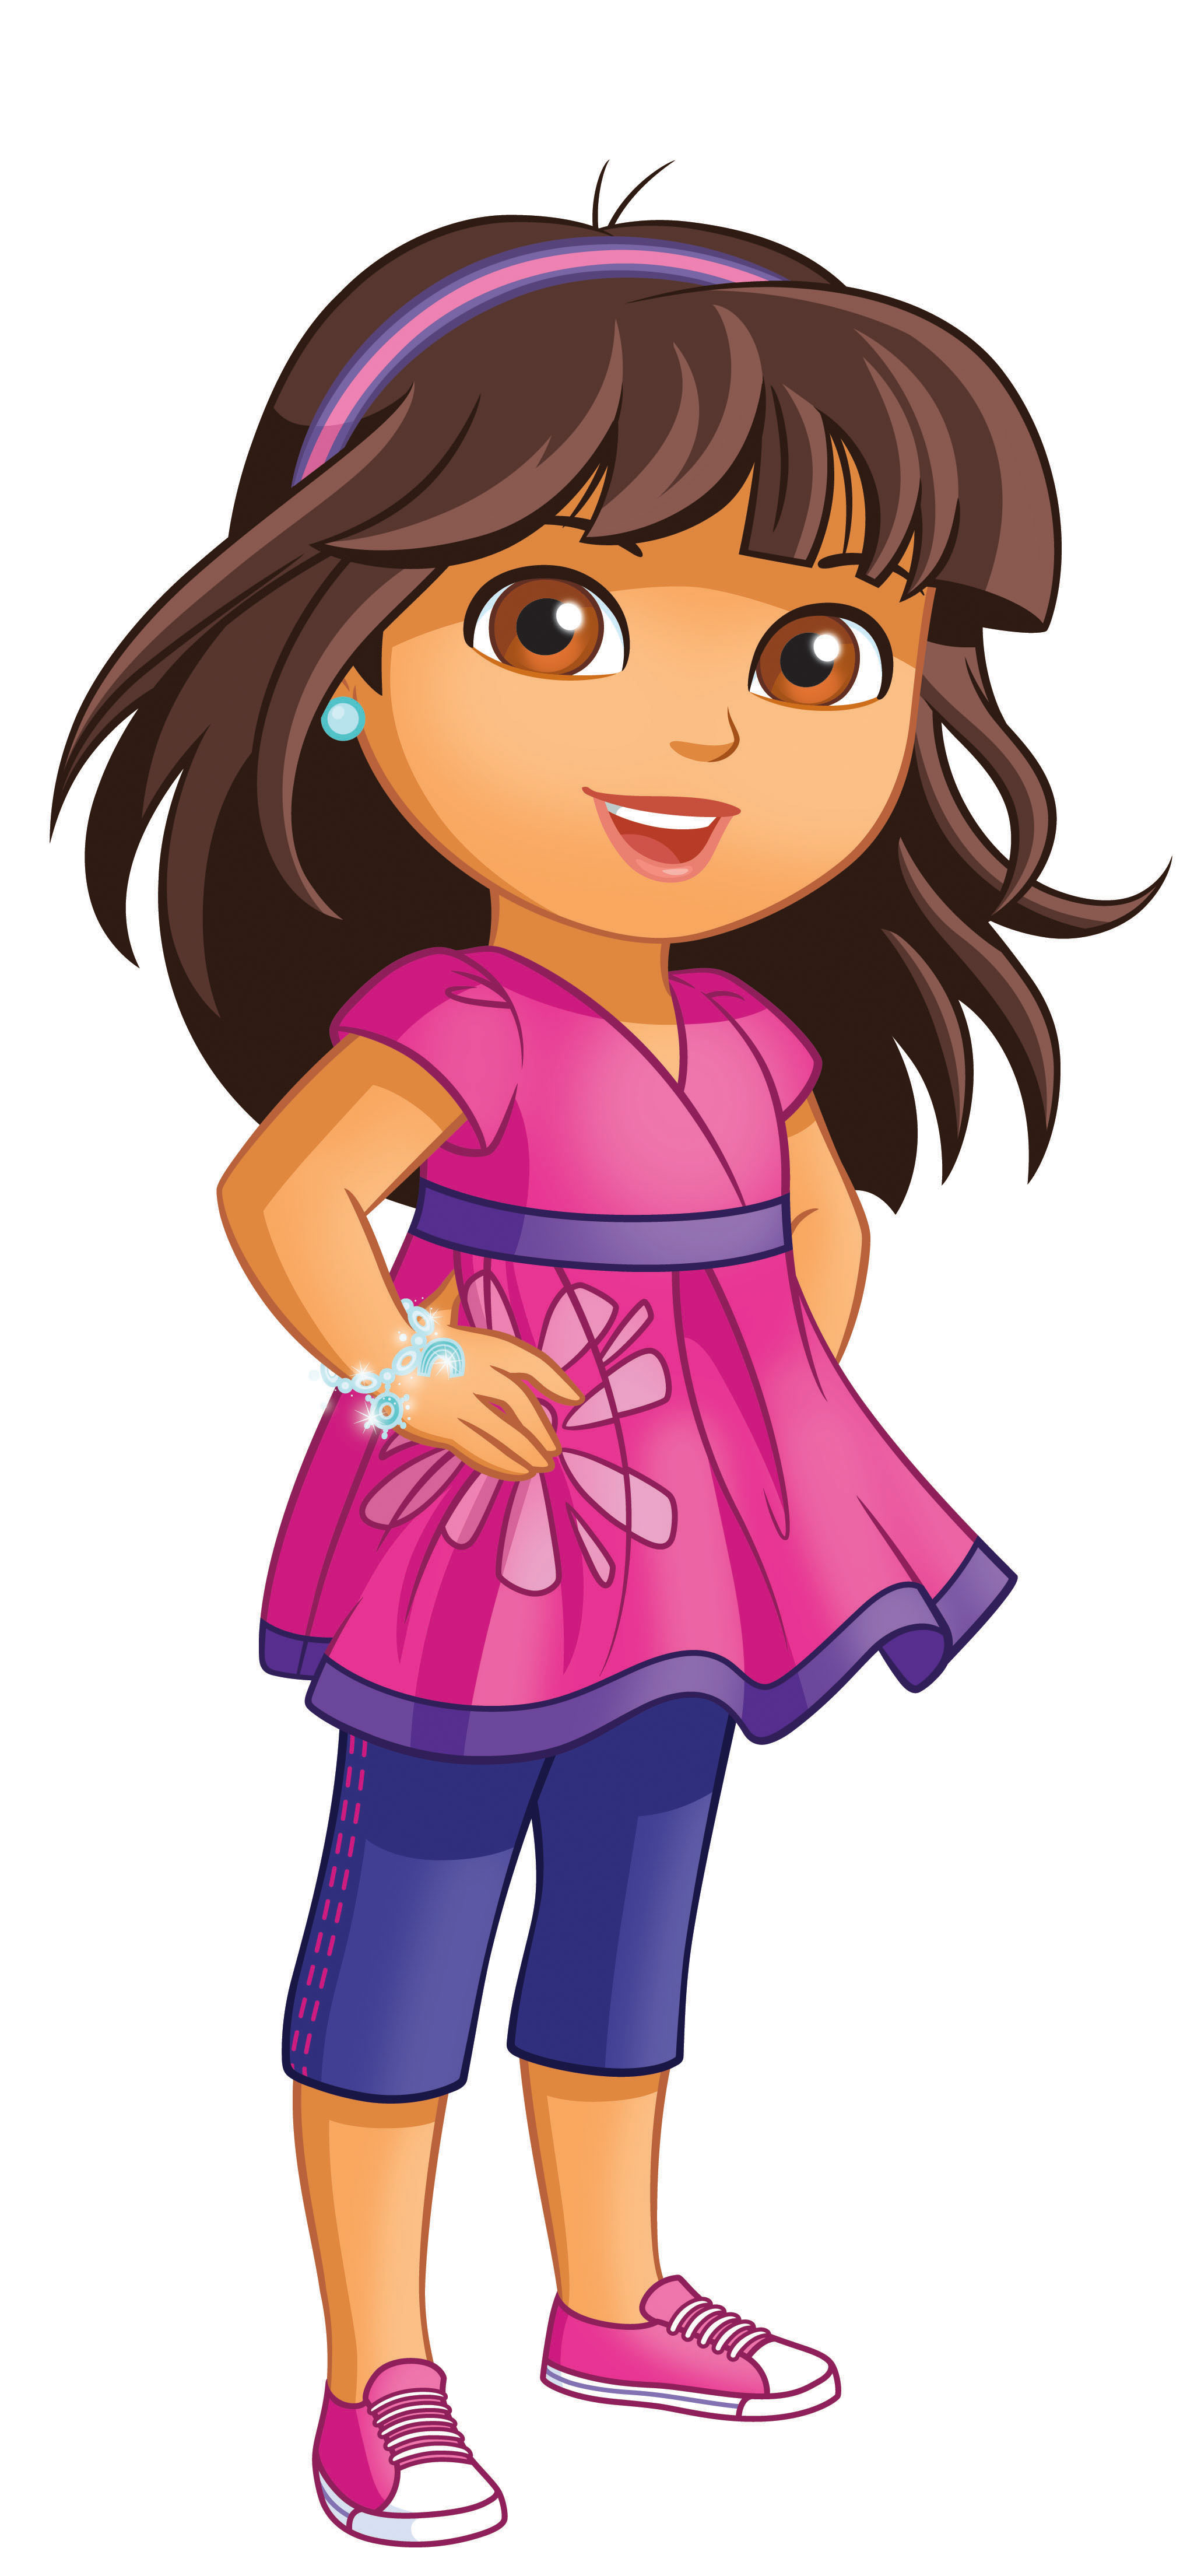 File:Dora grows up2.jpg - Wikipedia, the free encyclopedia